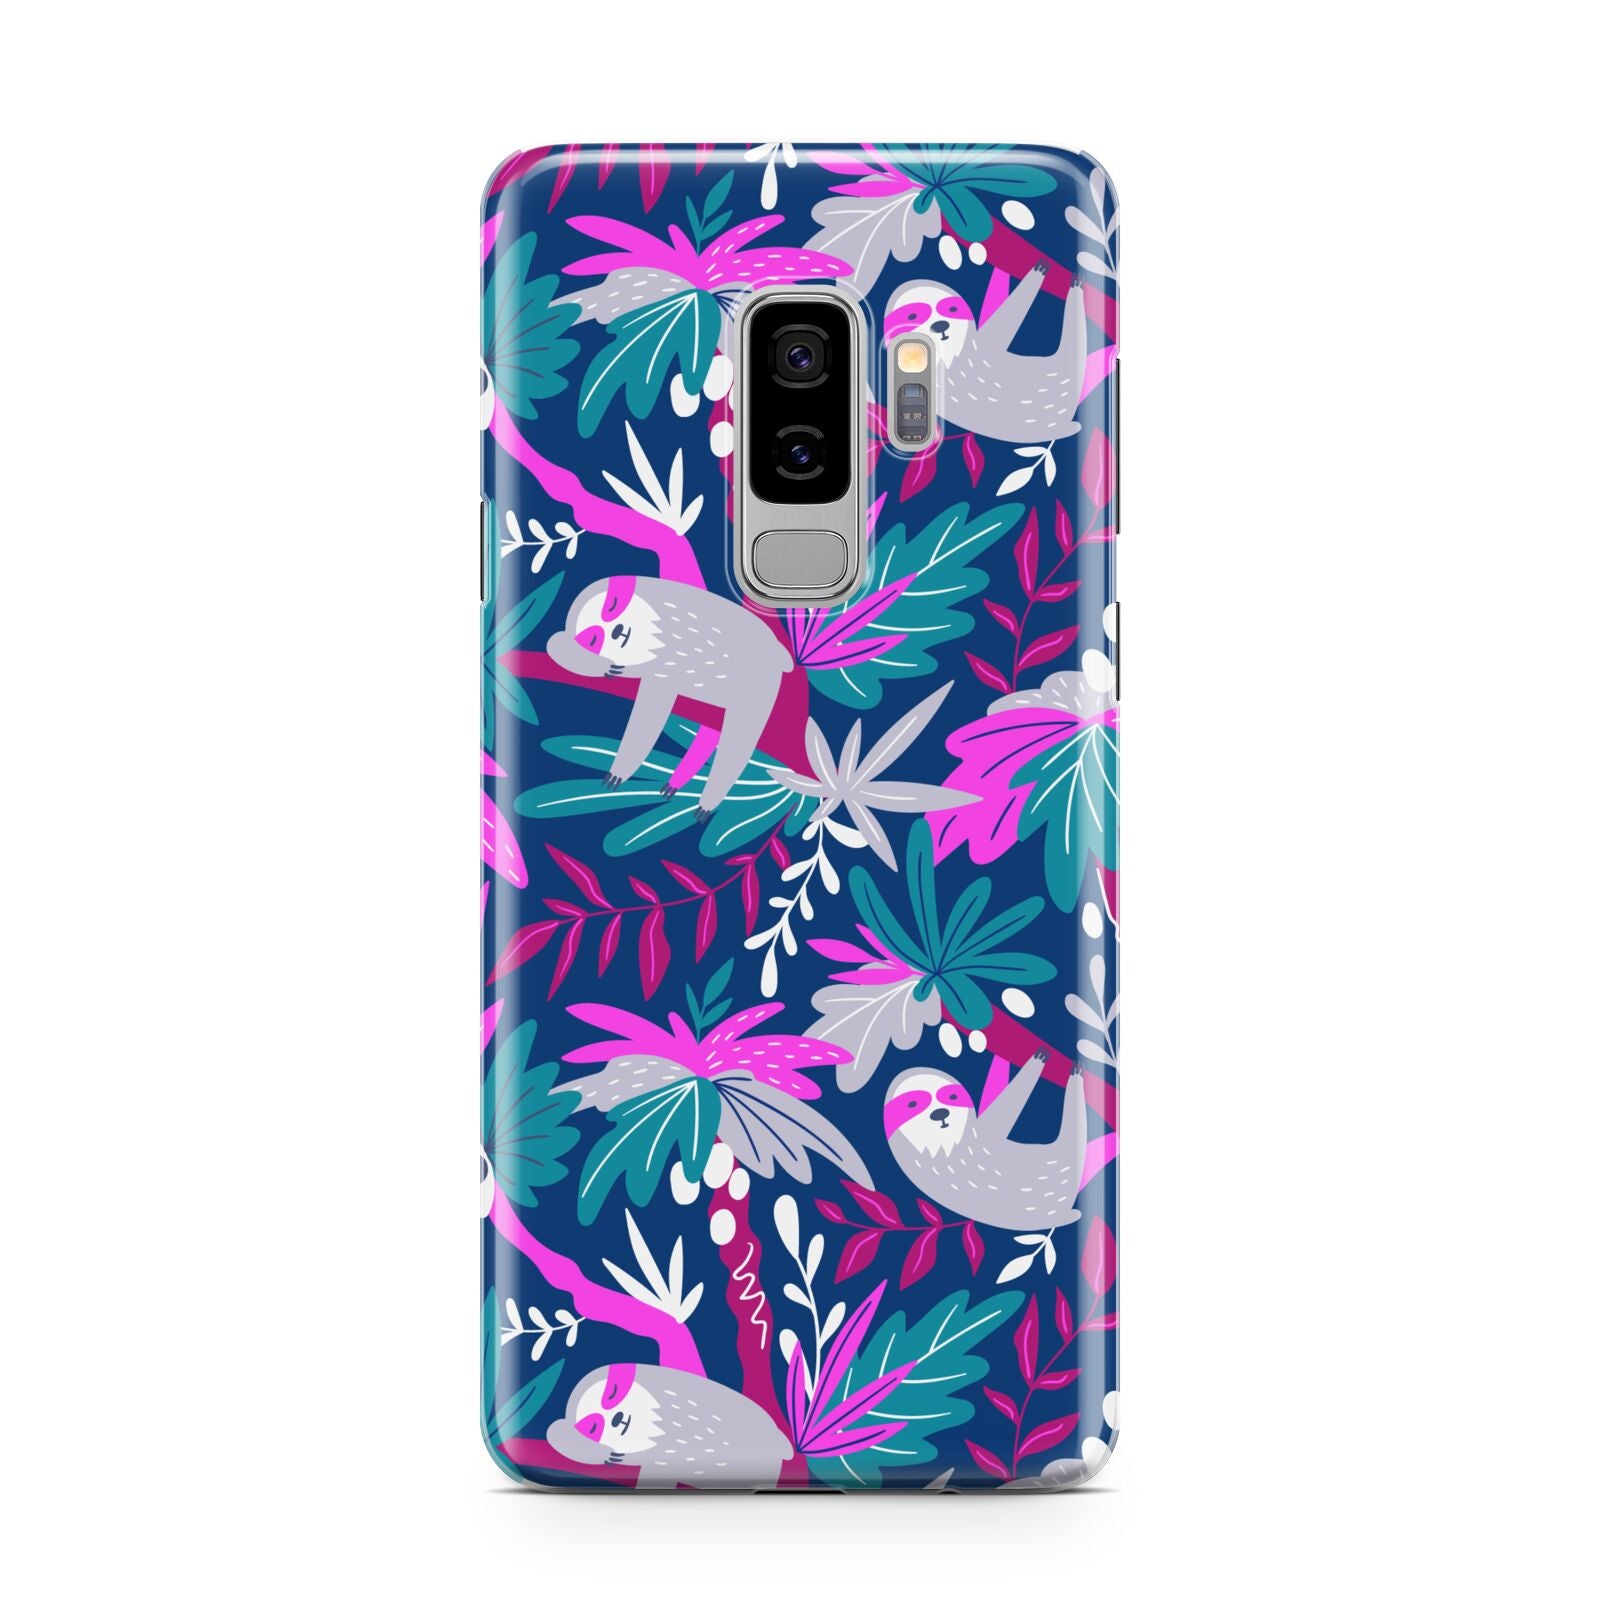 Sloth Samsung Galaxy S9 Plus Case on Silver phone